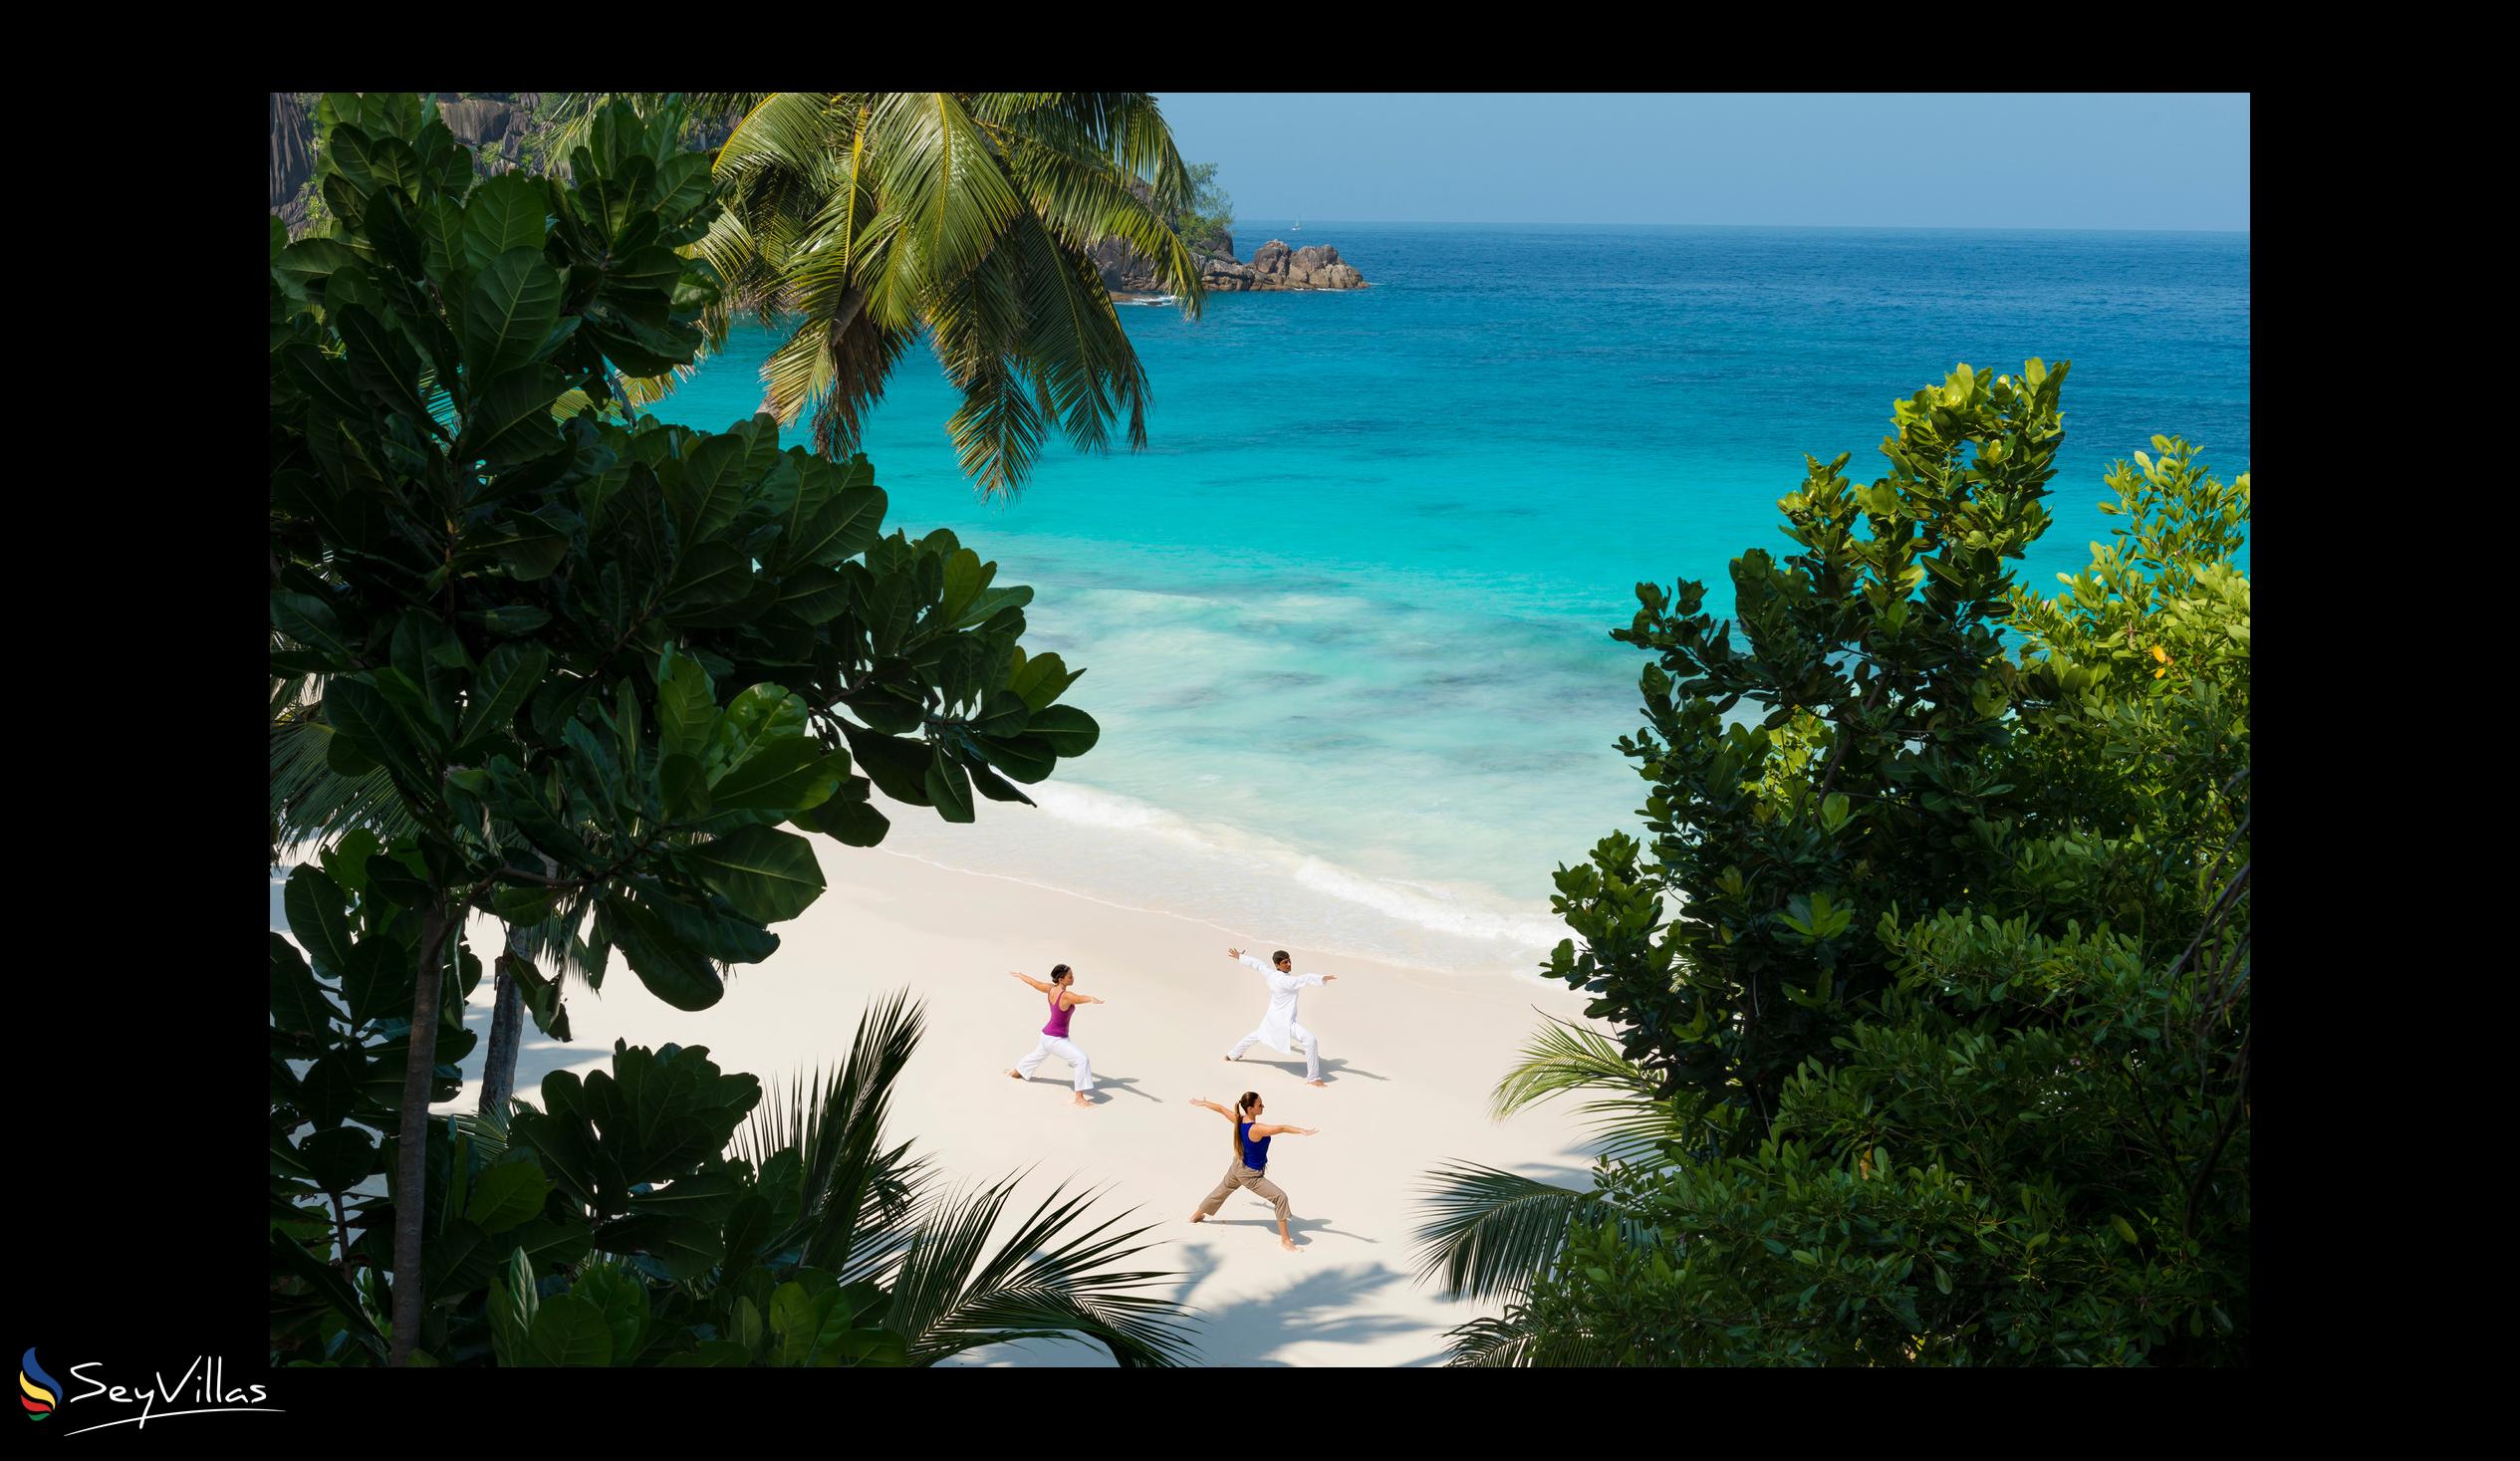 Photo 4: Four Seasons Resort - Outdoor area - Mahé (Seychelles)